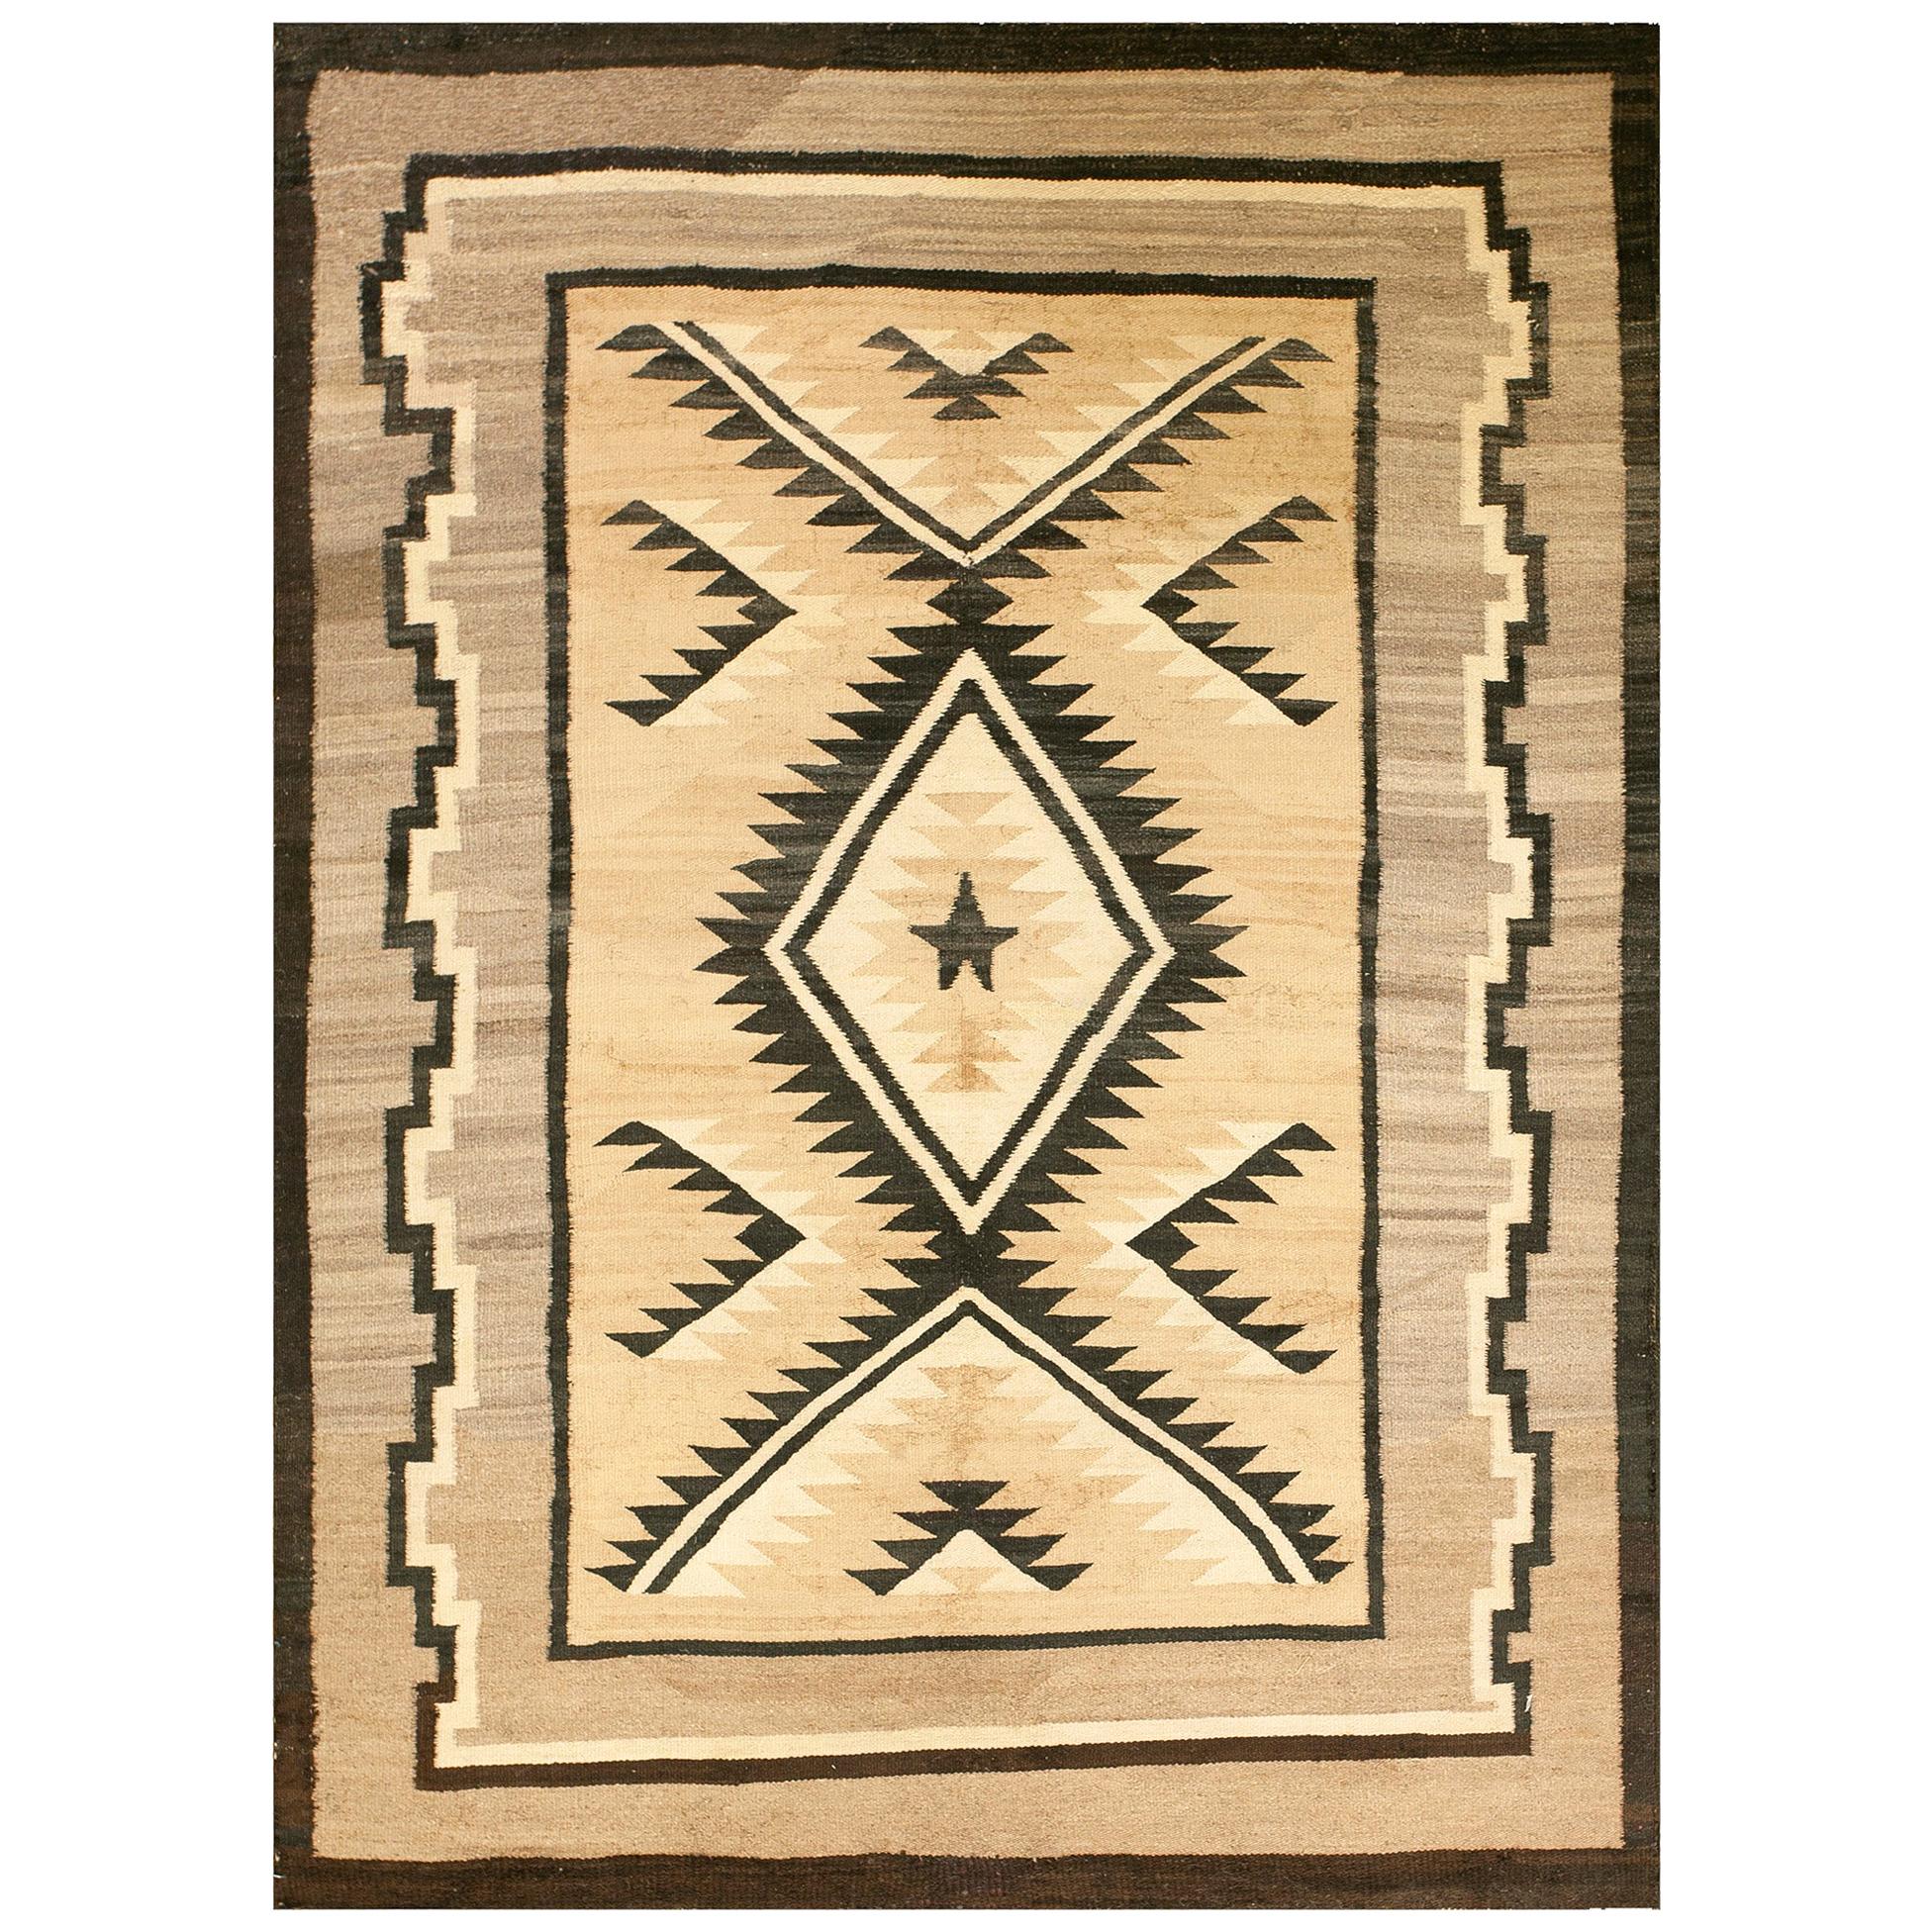 Early 20th Century American Navajo Carpet ( 4'2" x 5'10" - 127 x 178 )